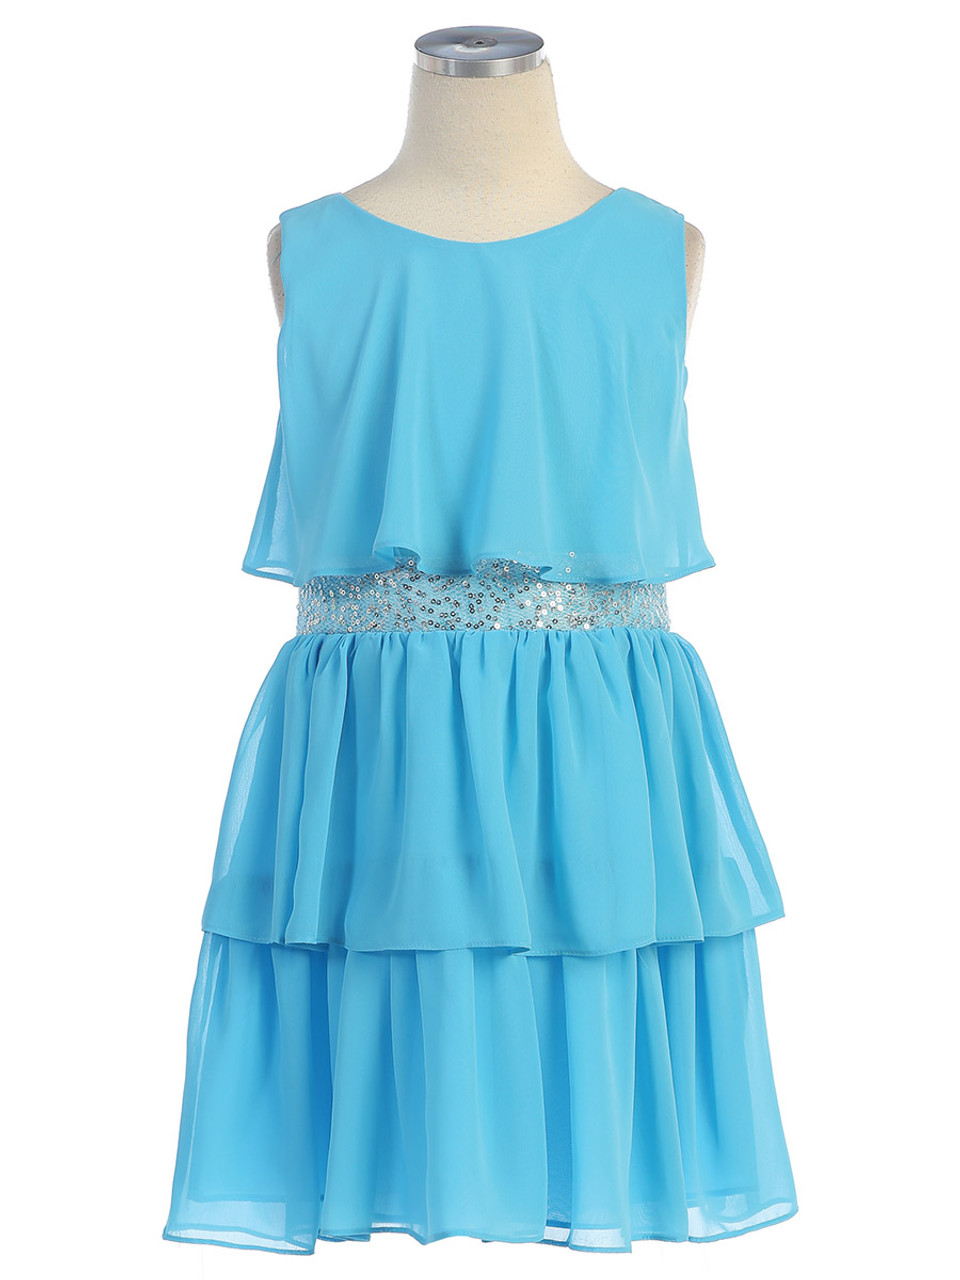 Turquoise Tiered Chiffon Dress w/ Sequins Belt - Pink Princess